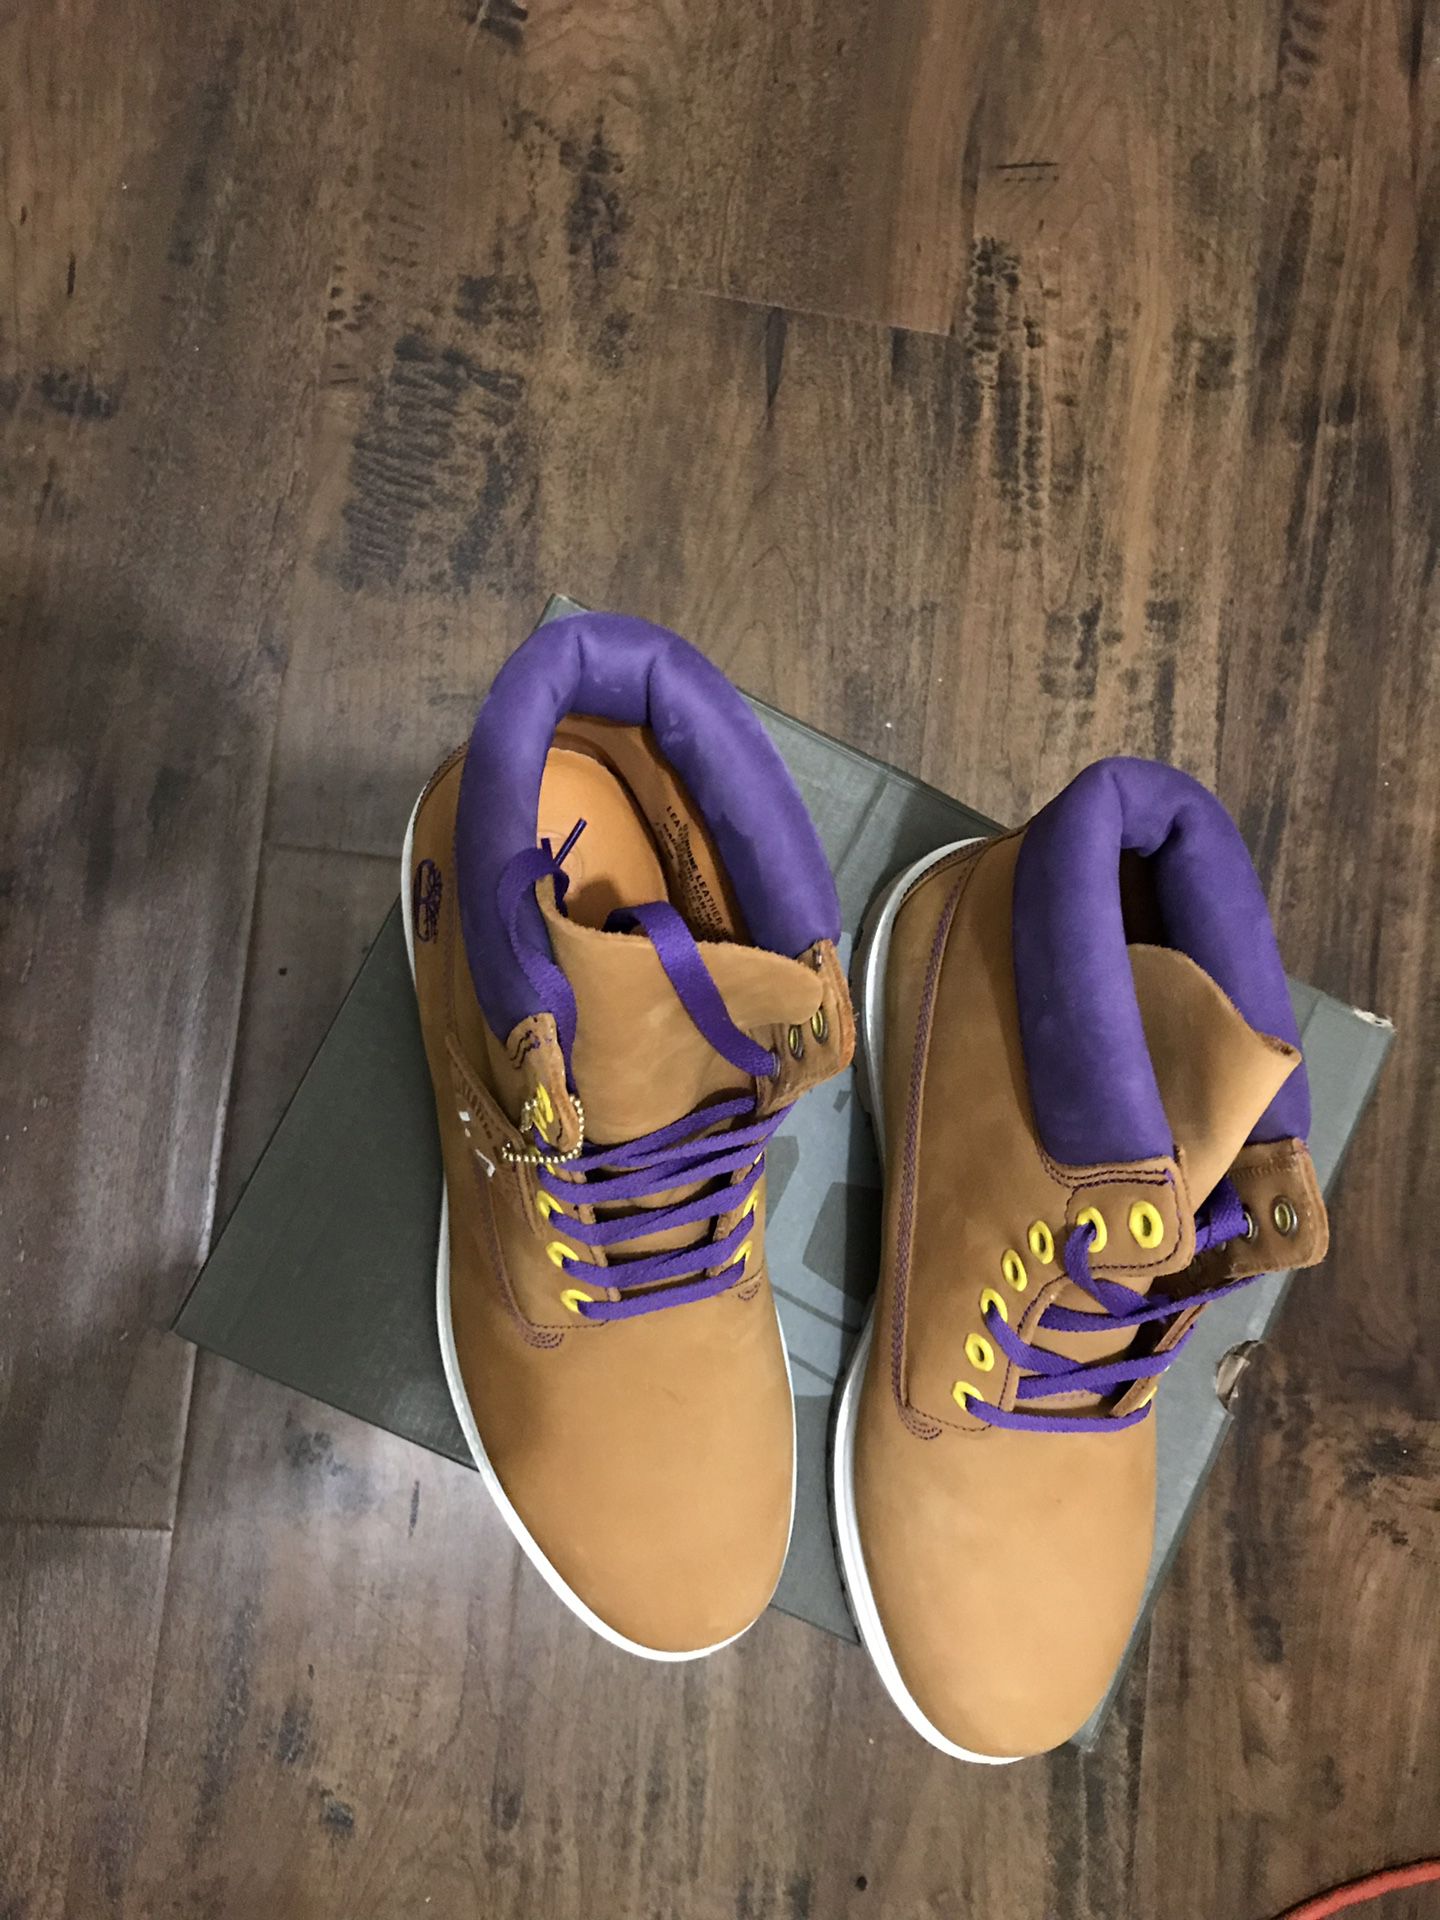 Men’s Timberland custom waterproof 6 inch Lakers boots.